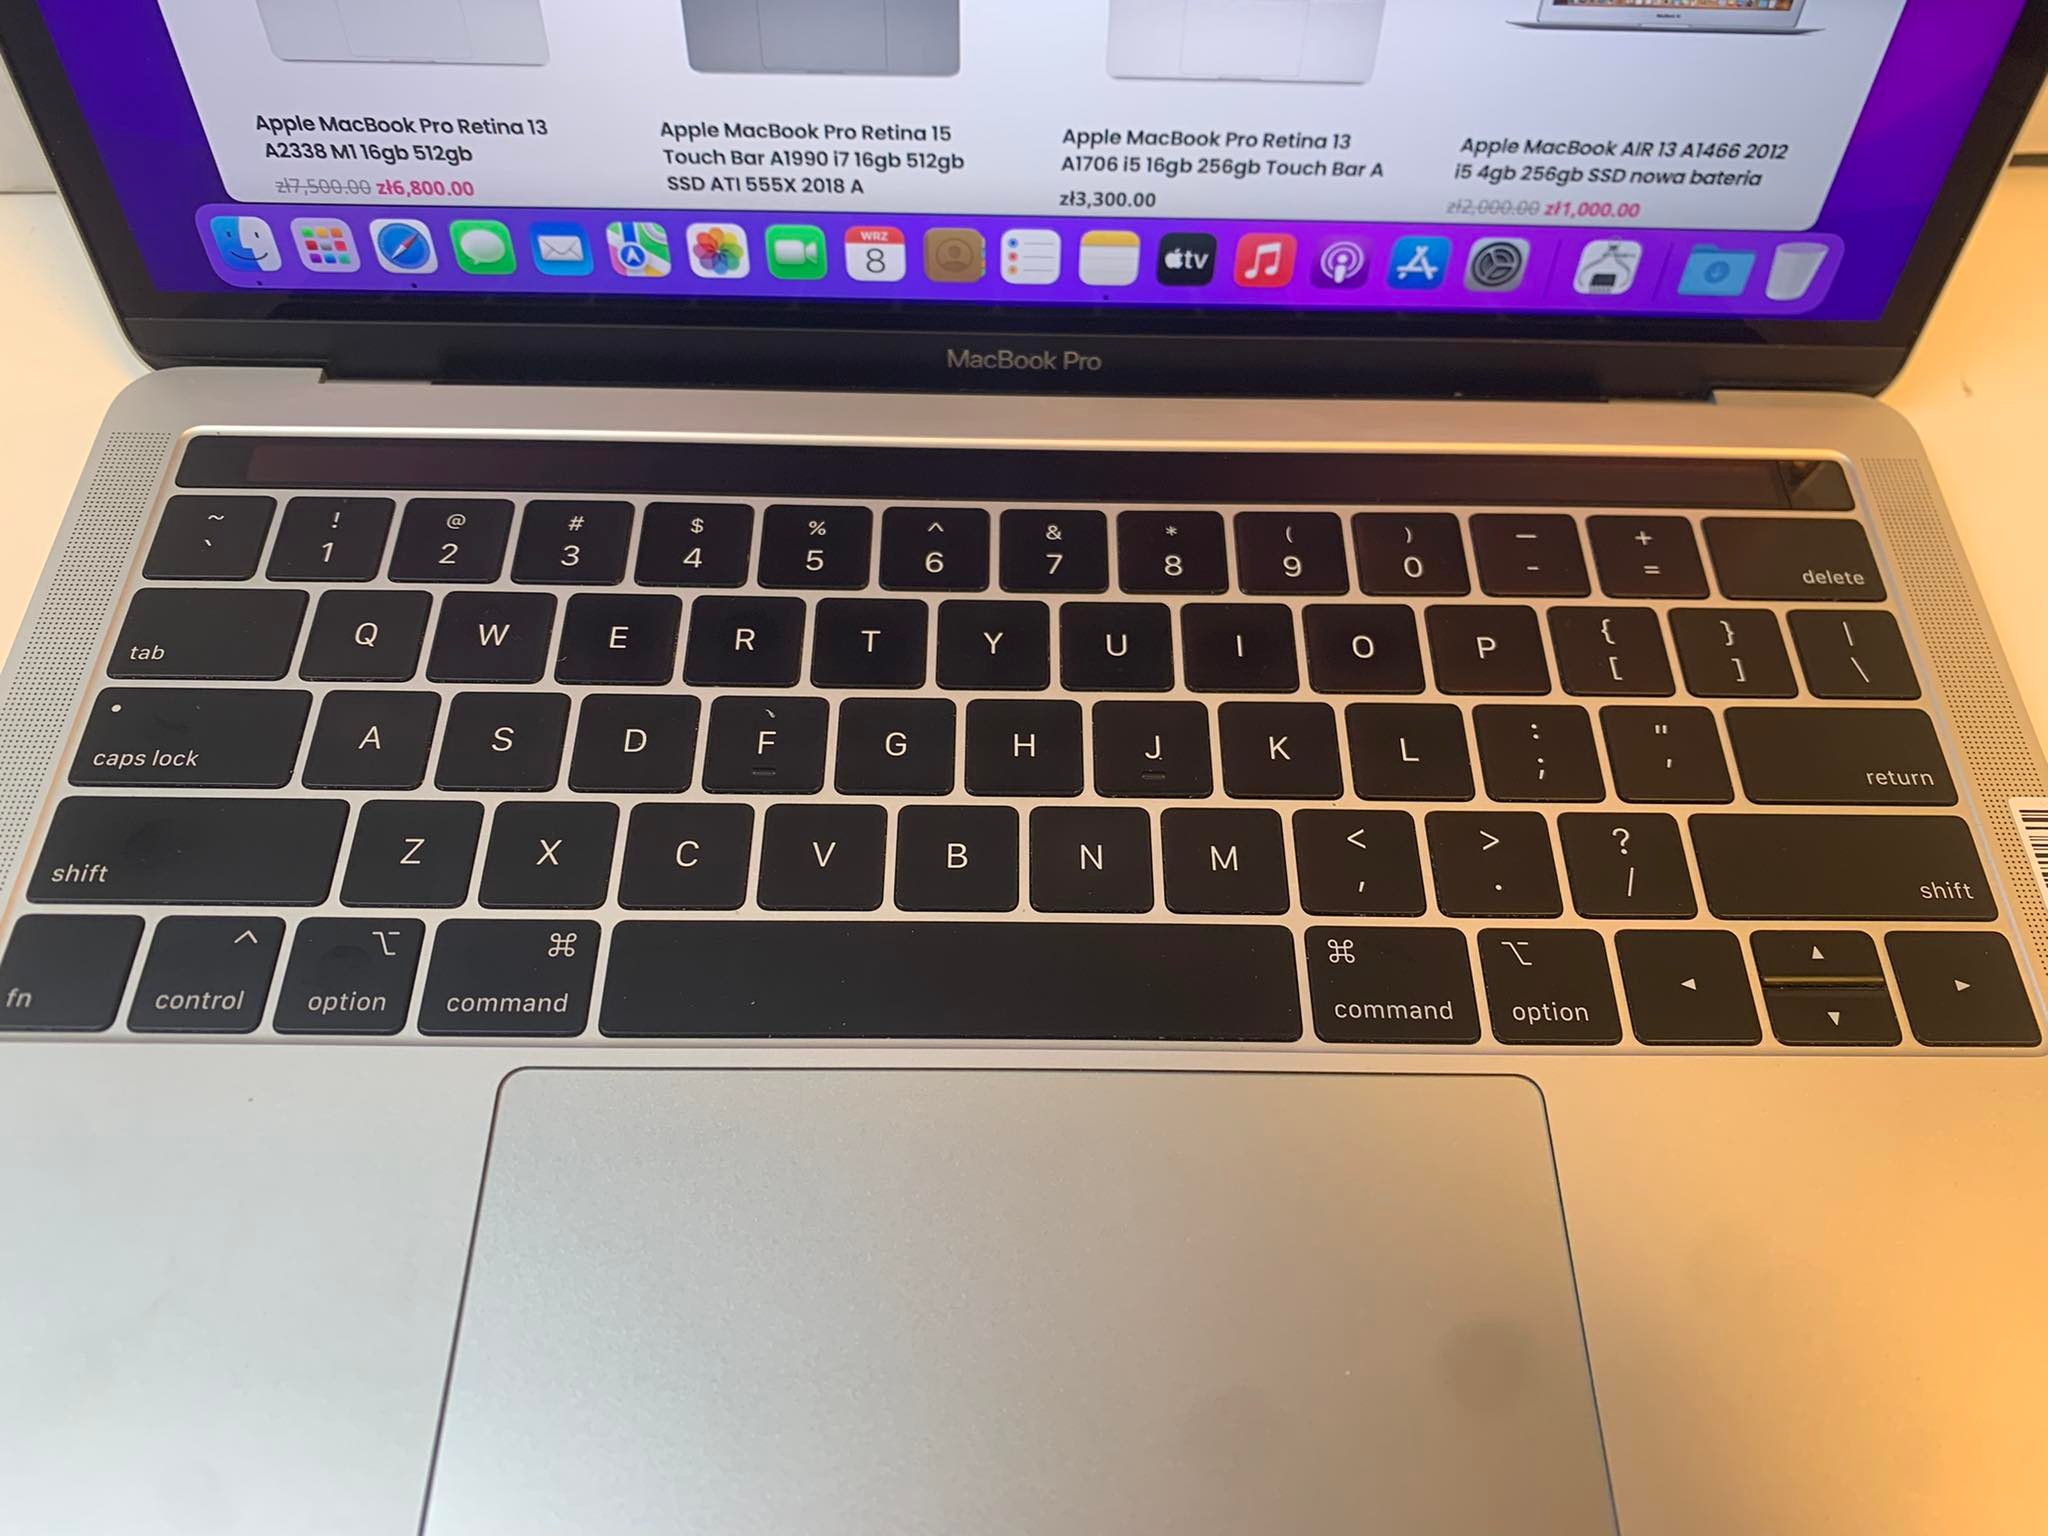 Apple-macbook-pro-a1989-i5-16gb-silver-2018-02